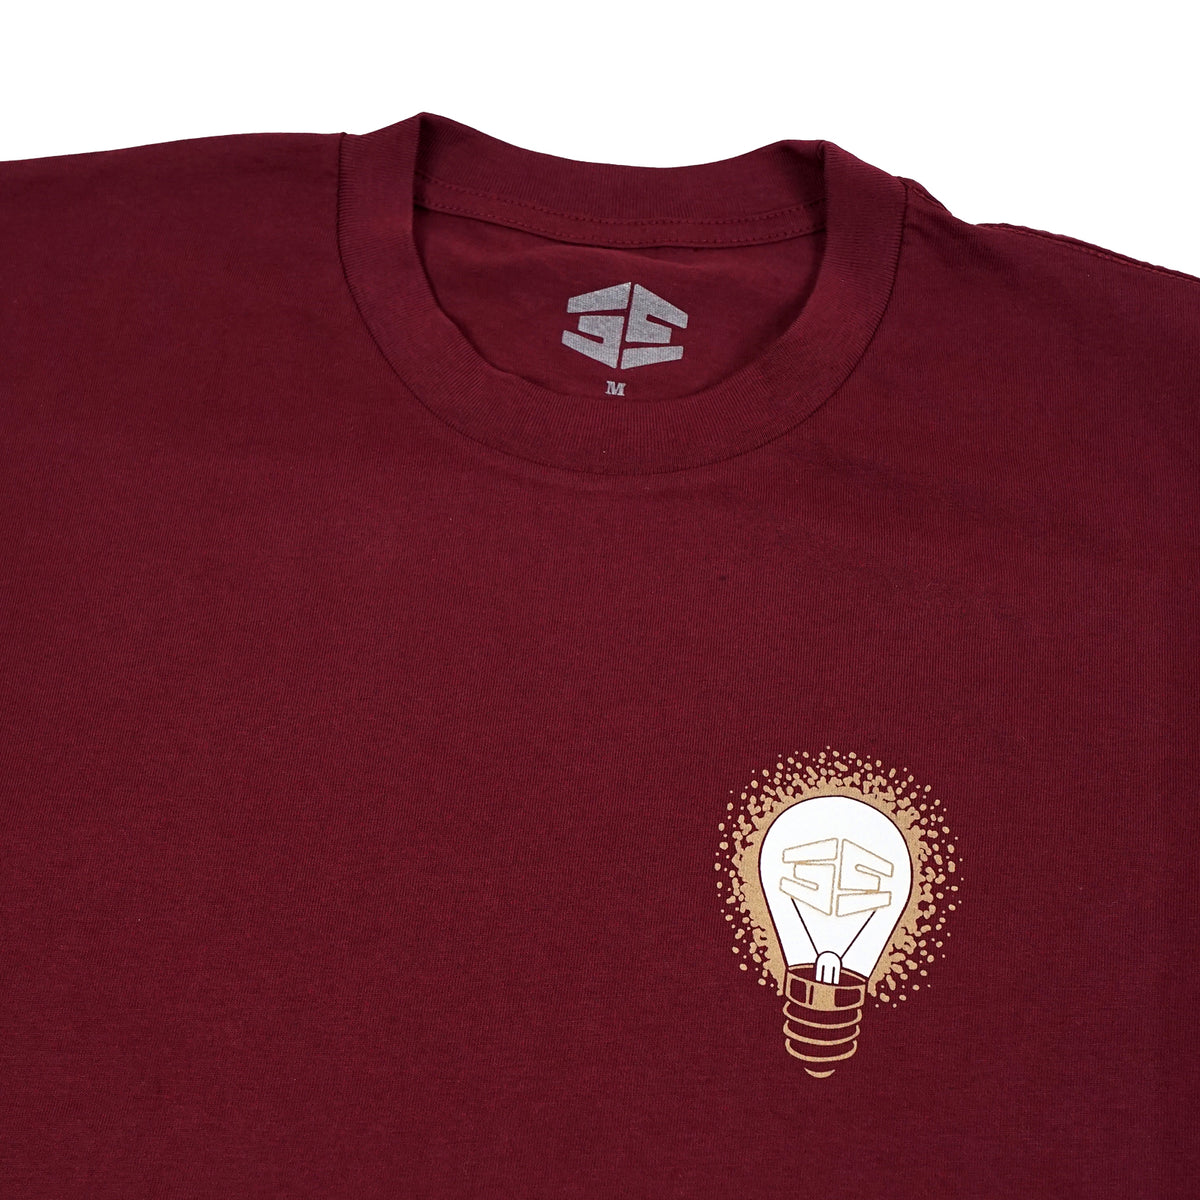 35th North 'Bright Idea' T-Shirt - Burgundy